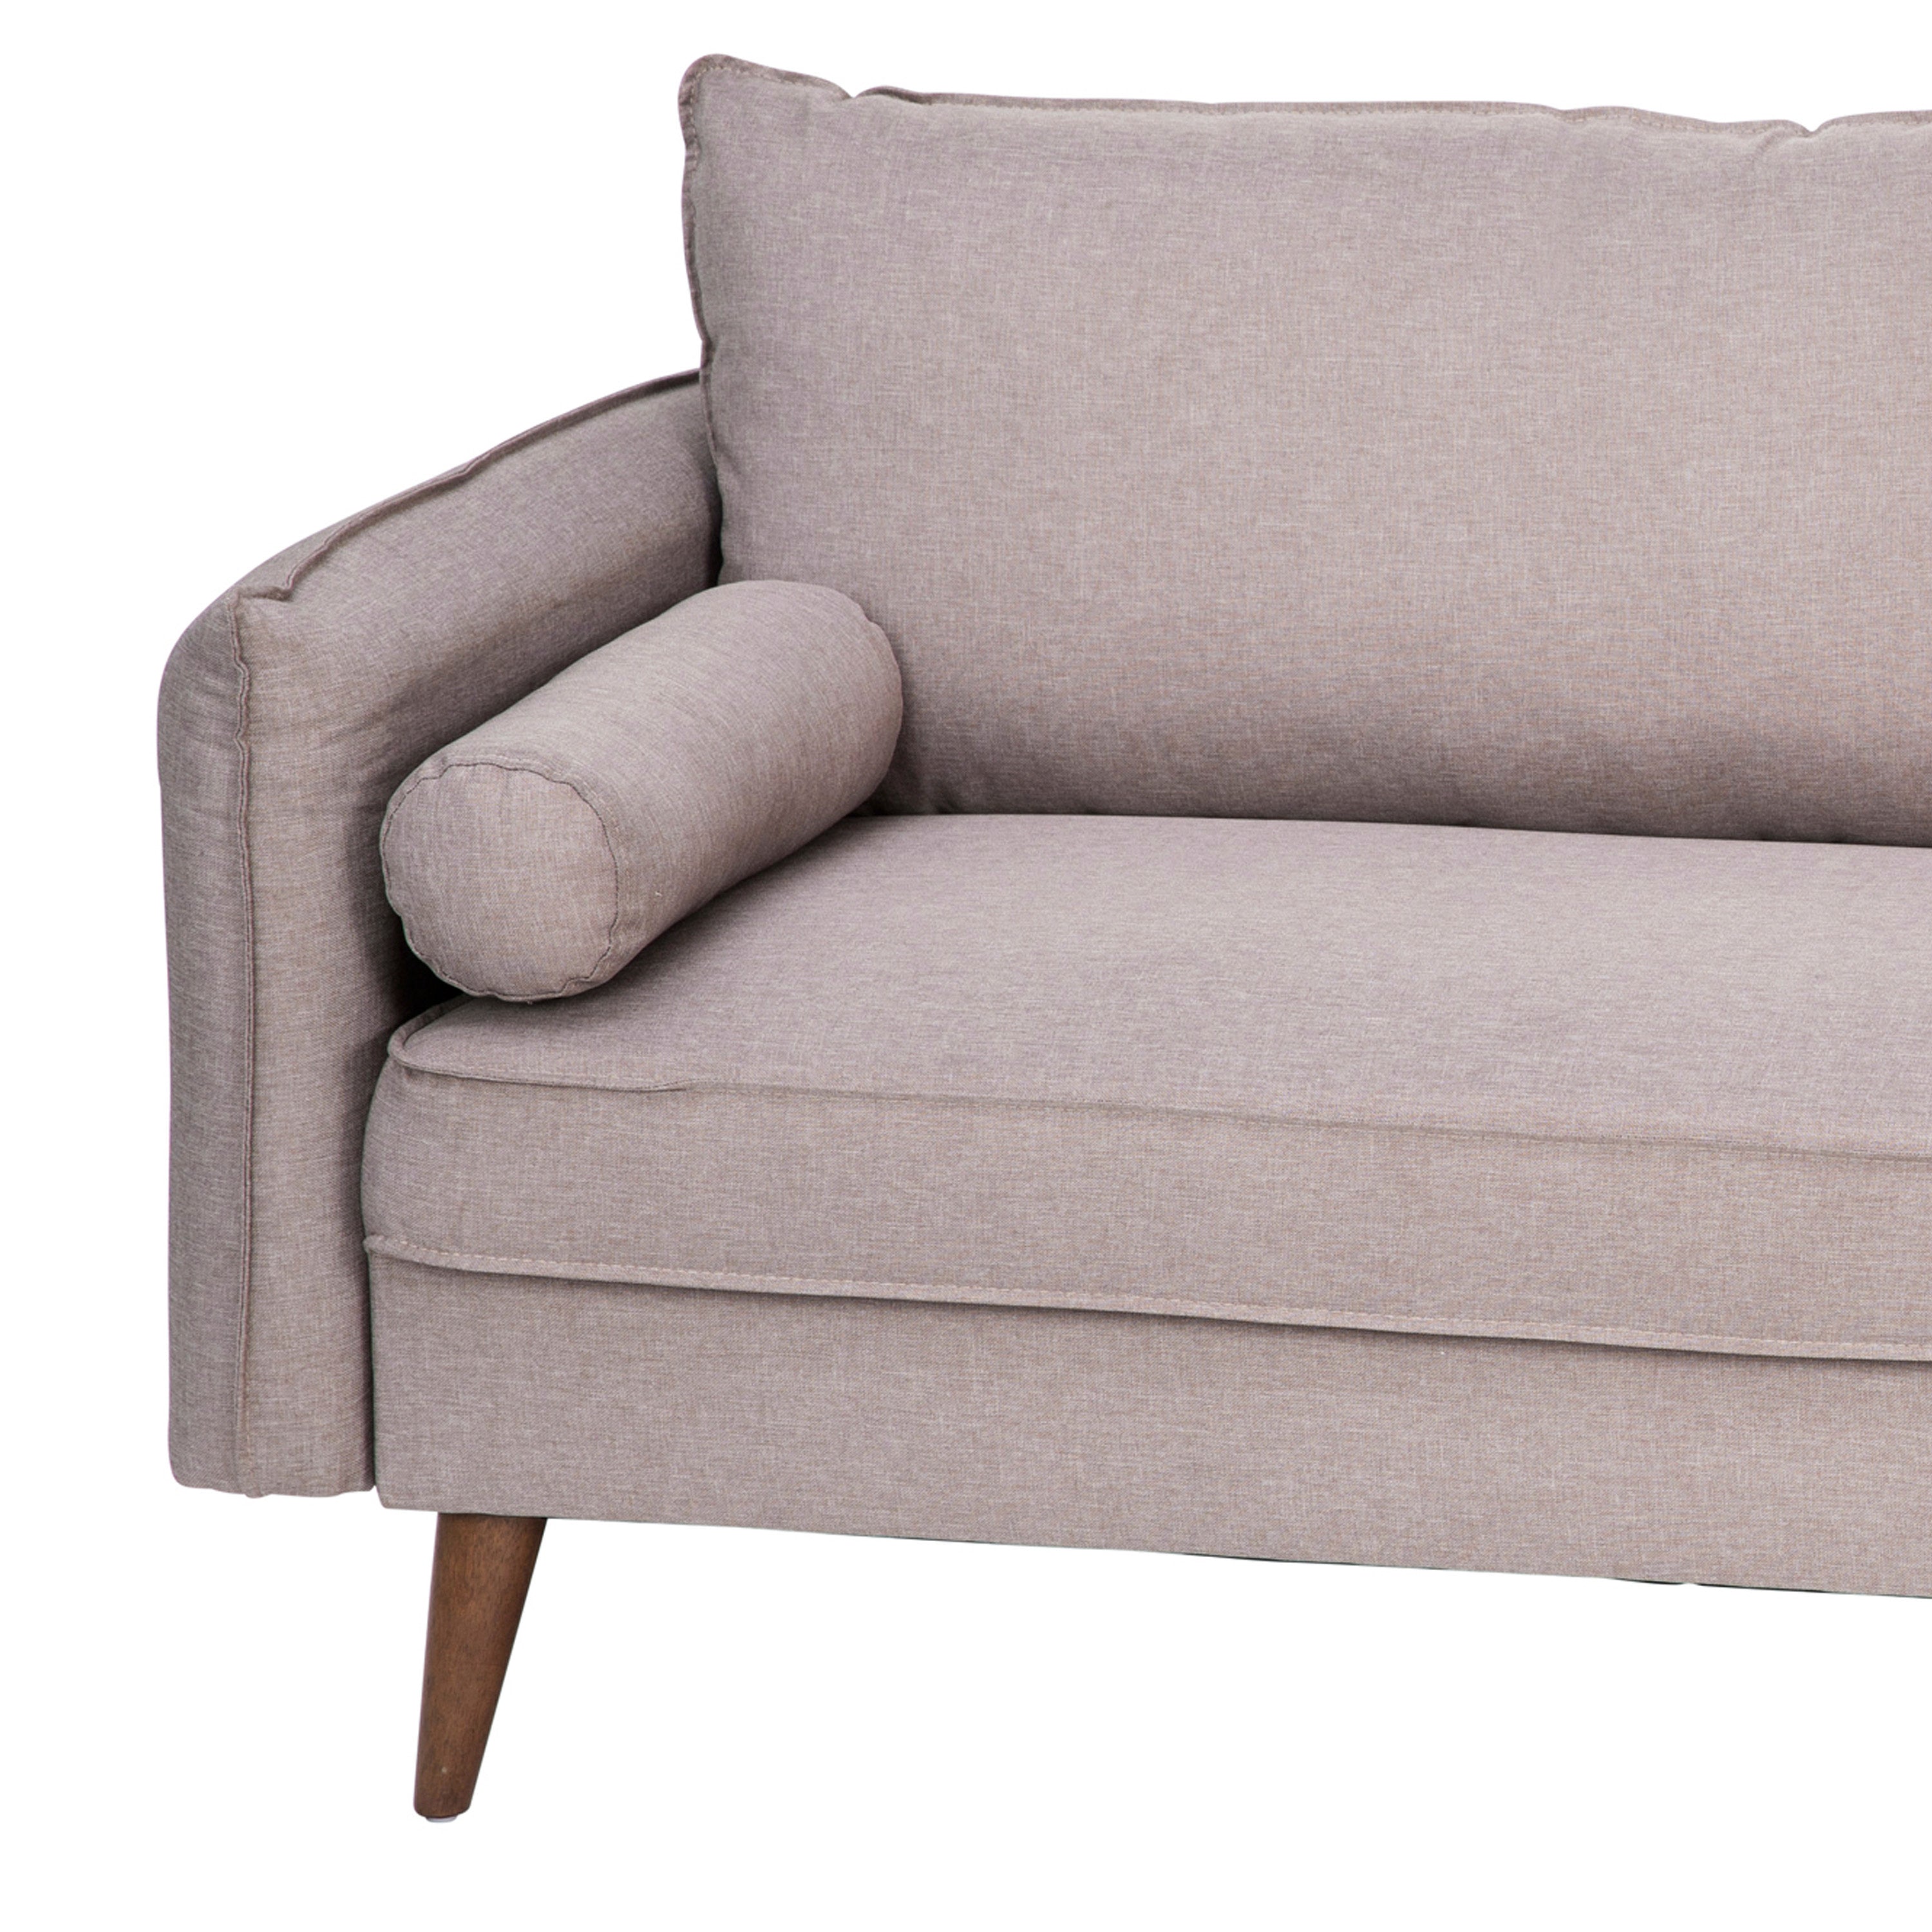 Evie Mid-Century Modern Sofa with Fabric Upholstery & Solid Wood Legs-Sofa-Flash Furniture-Wall2Wall Furnishings